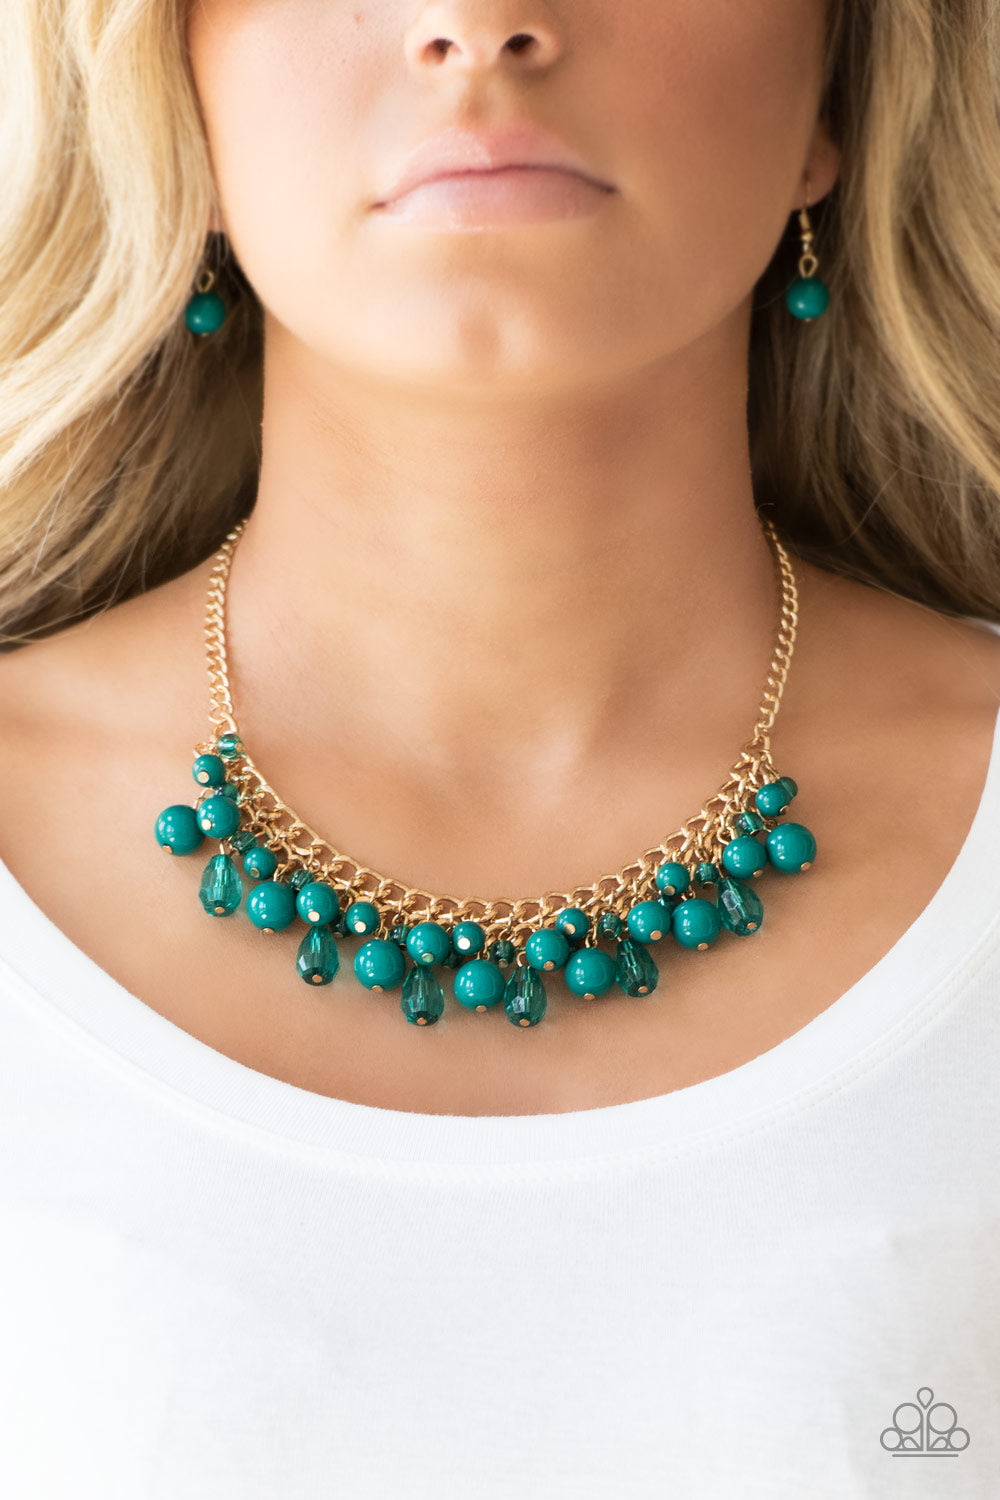 Paparazzi Tour de Trendsetter - Green - Necklace & Earrings - $5 Jewelry with Ashley Swint